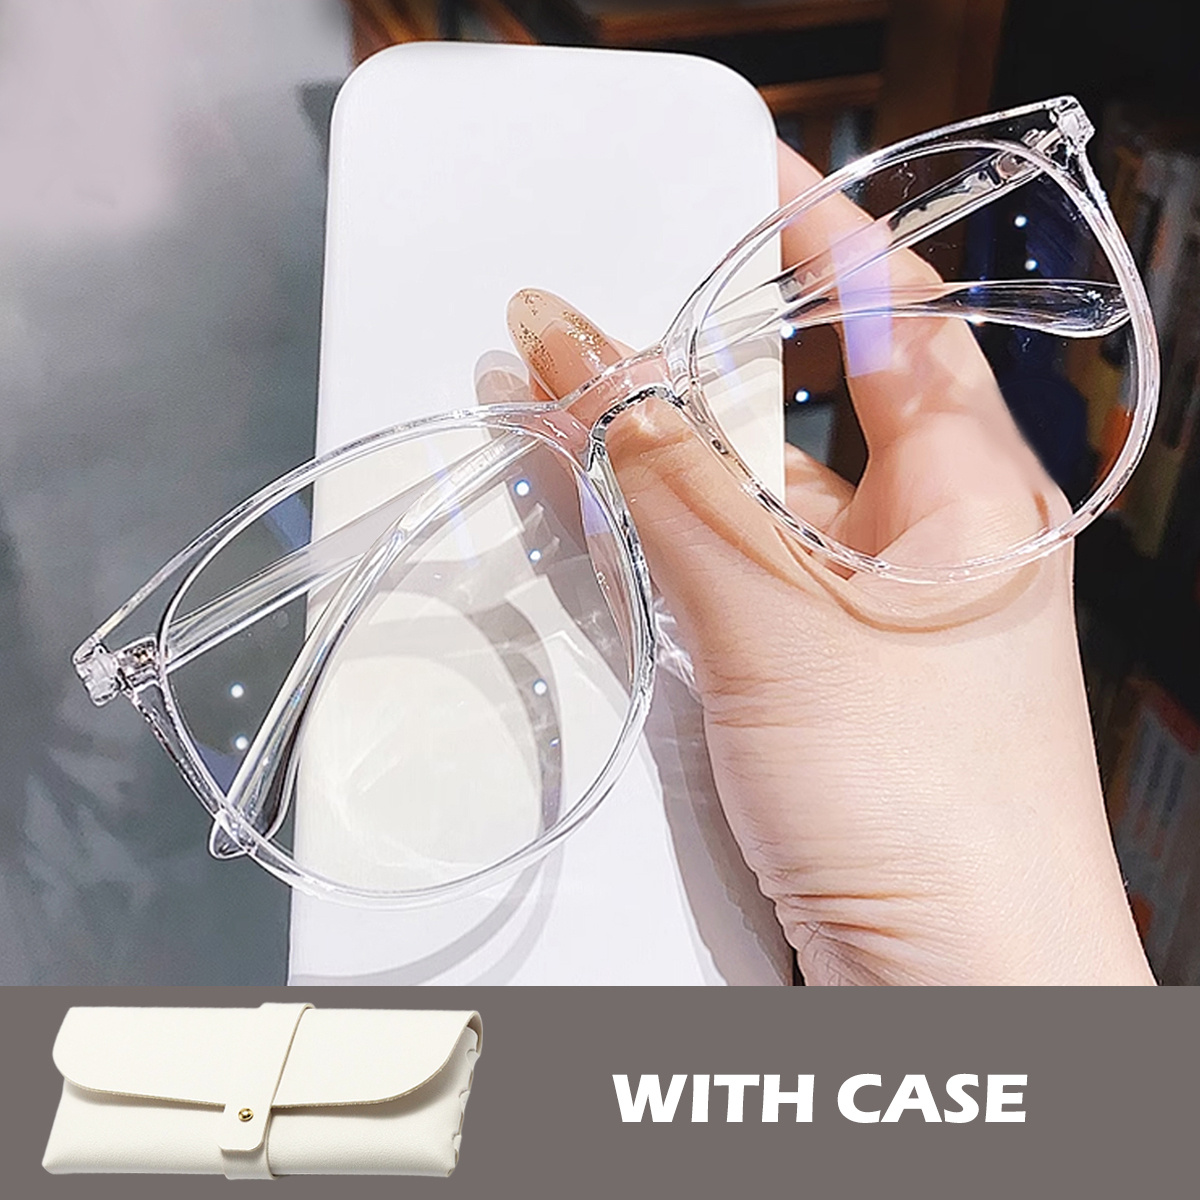 Round Eyewear Transparent Computer Glasses Frame Women Men